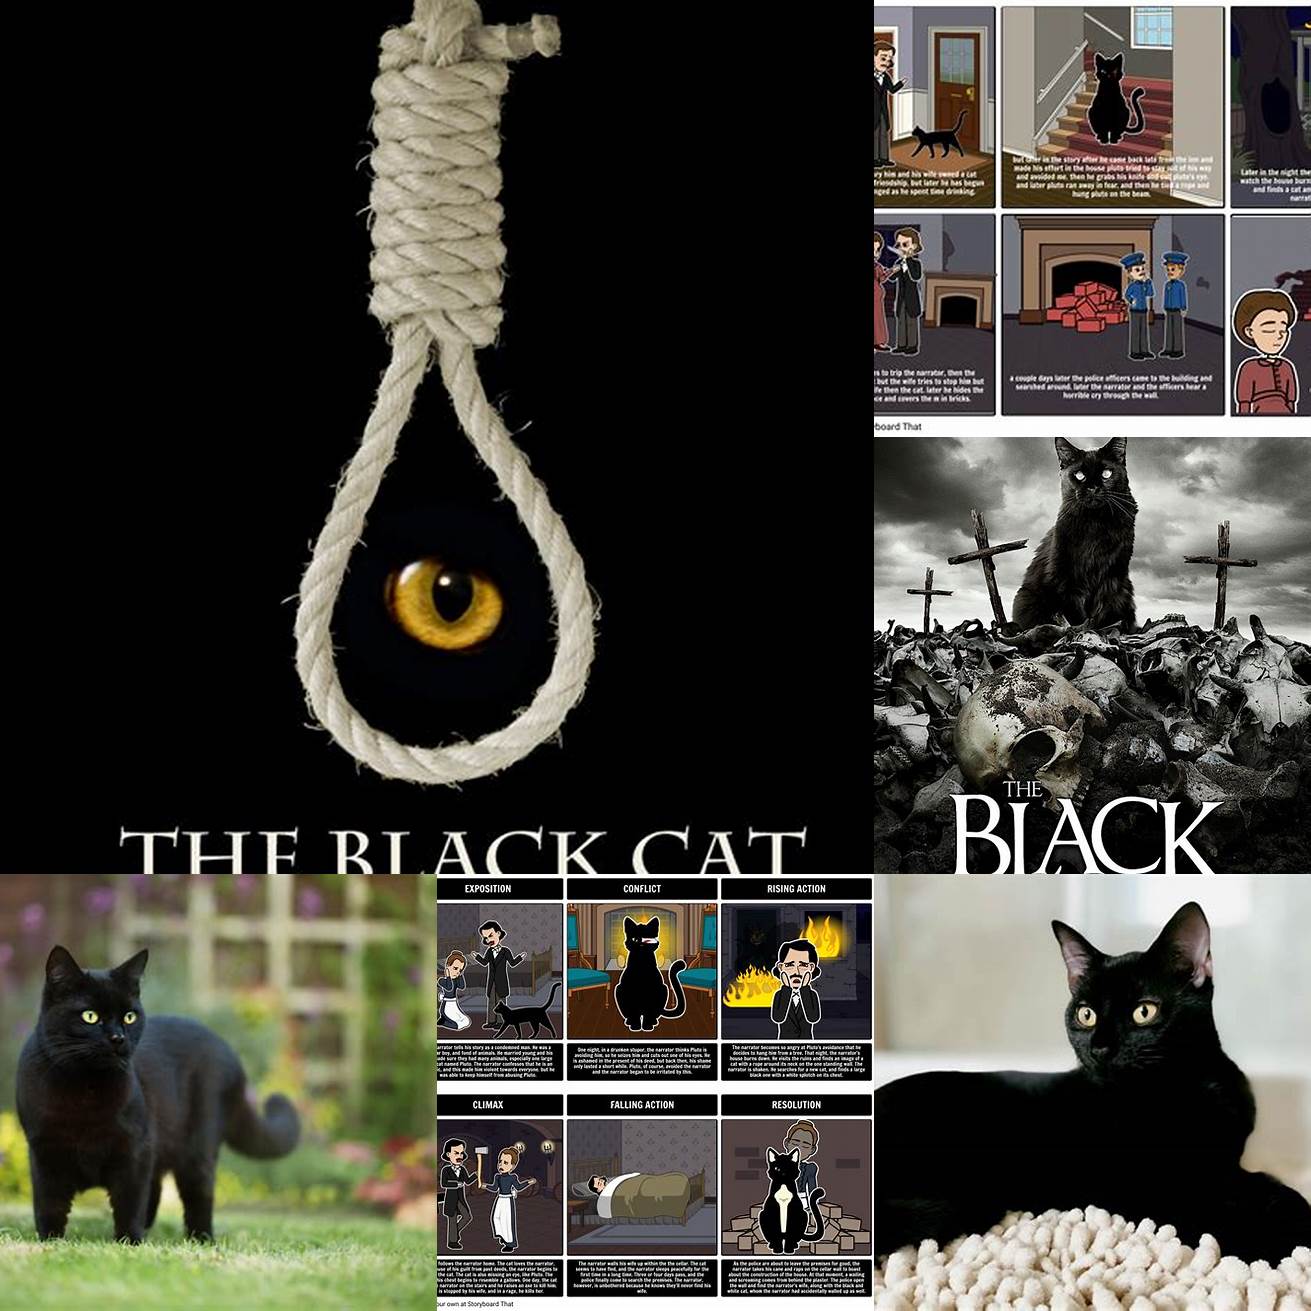 The Black Cat in The Black Cat